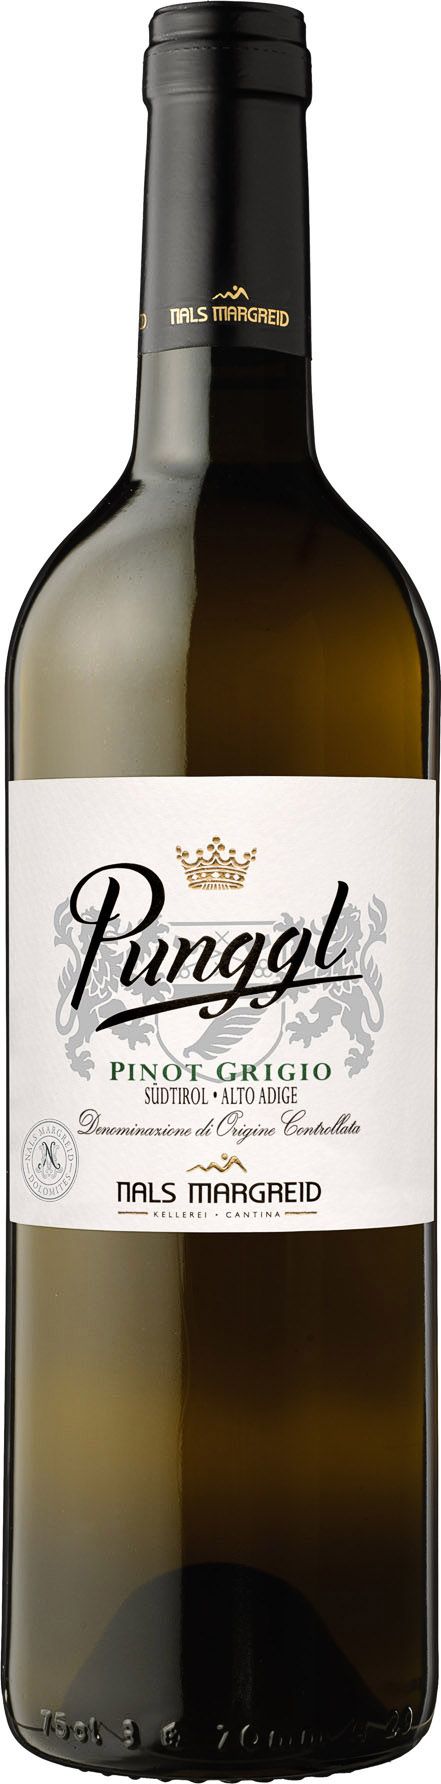 Nals Margreid, Punggl Pinot Grigio, 2016